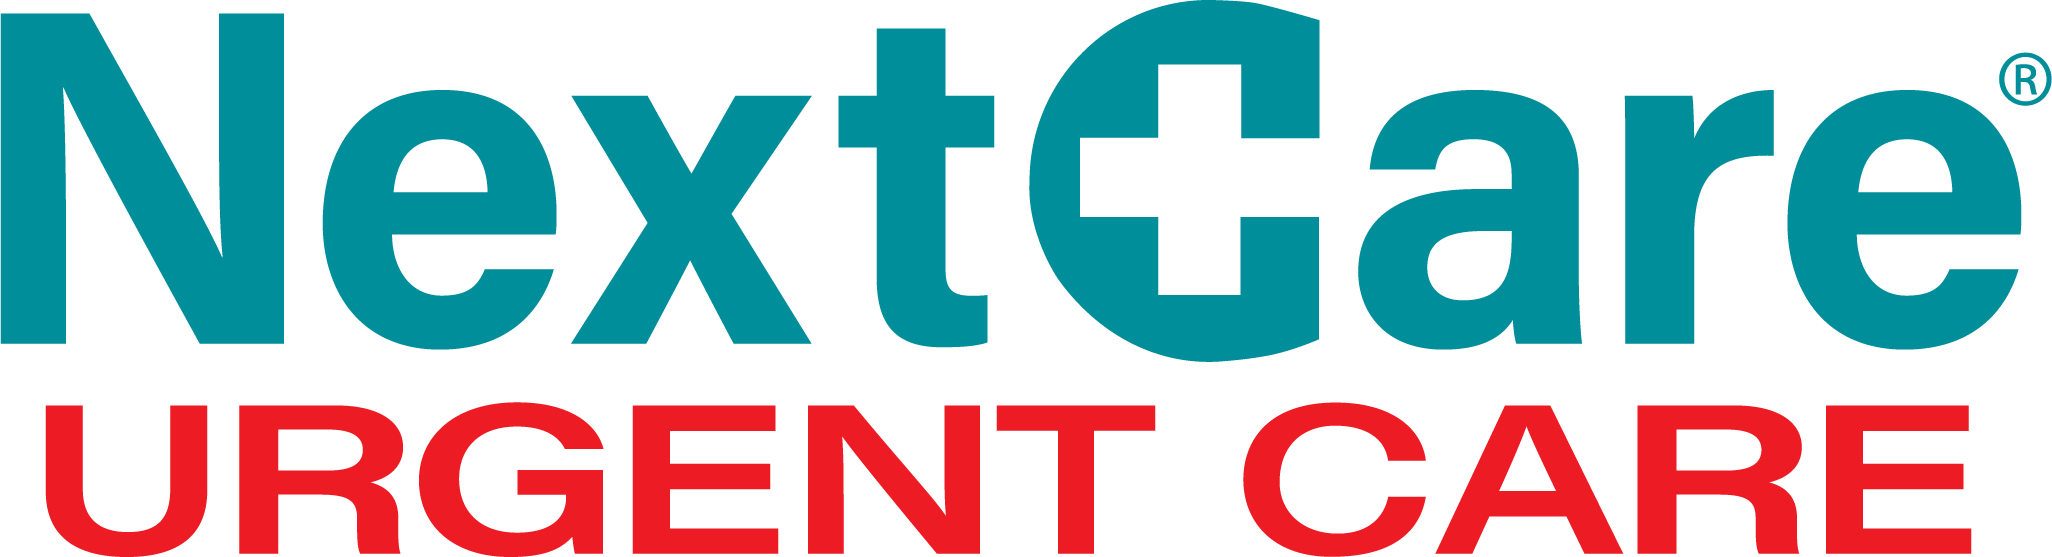 NextCare Urgent Care - Rayford Logo